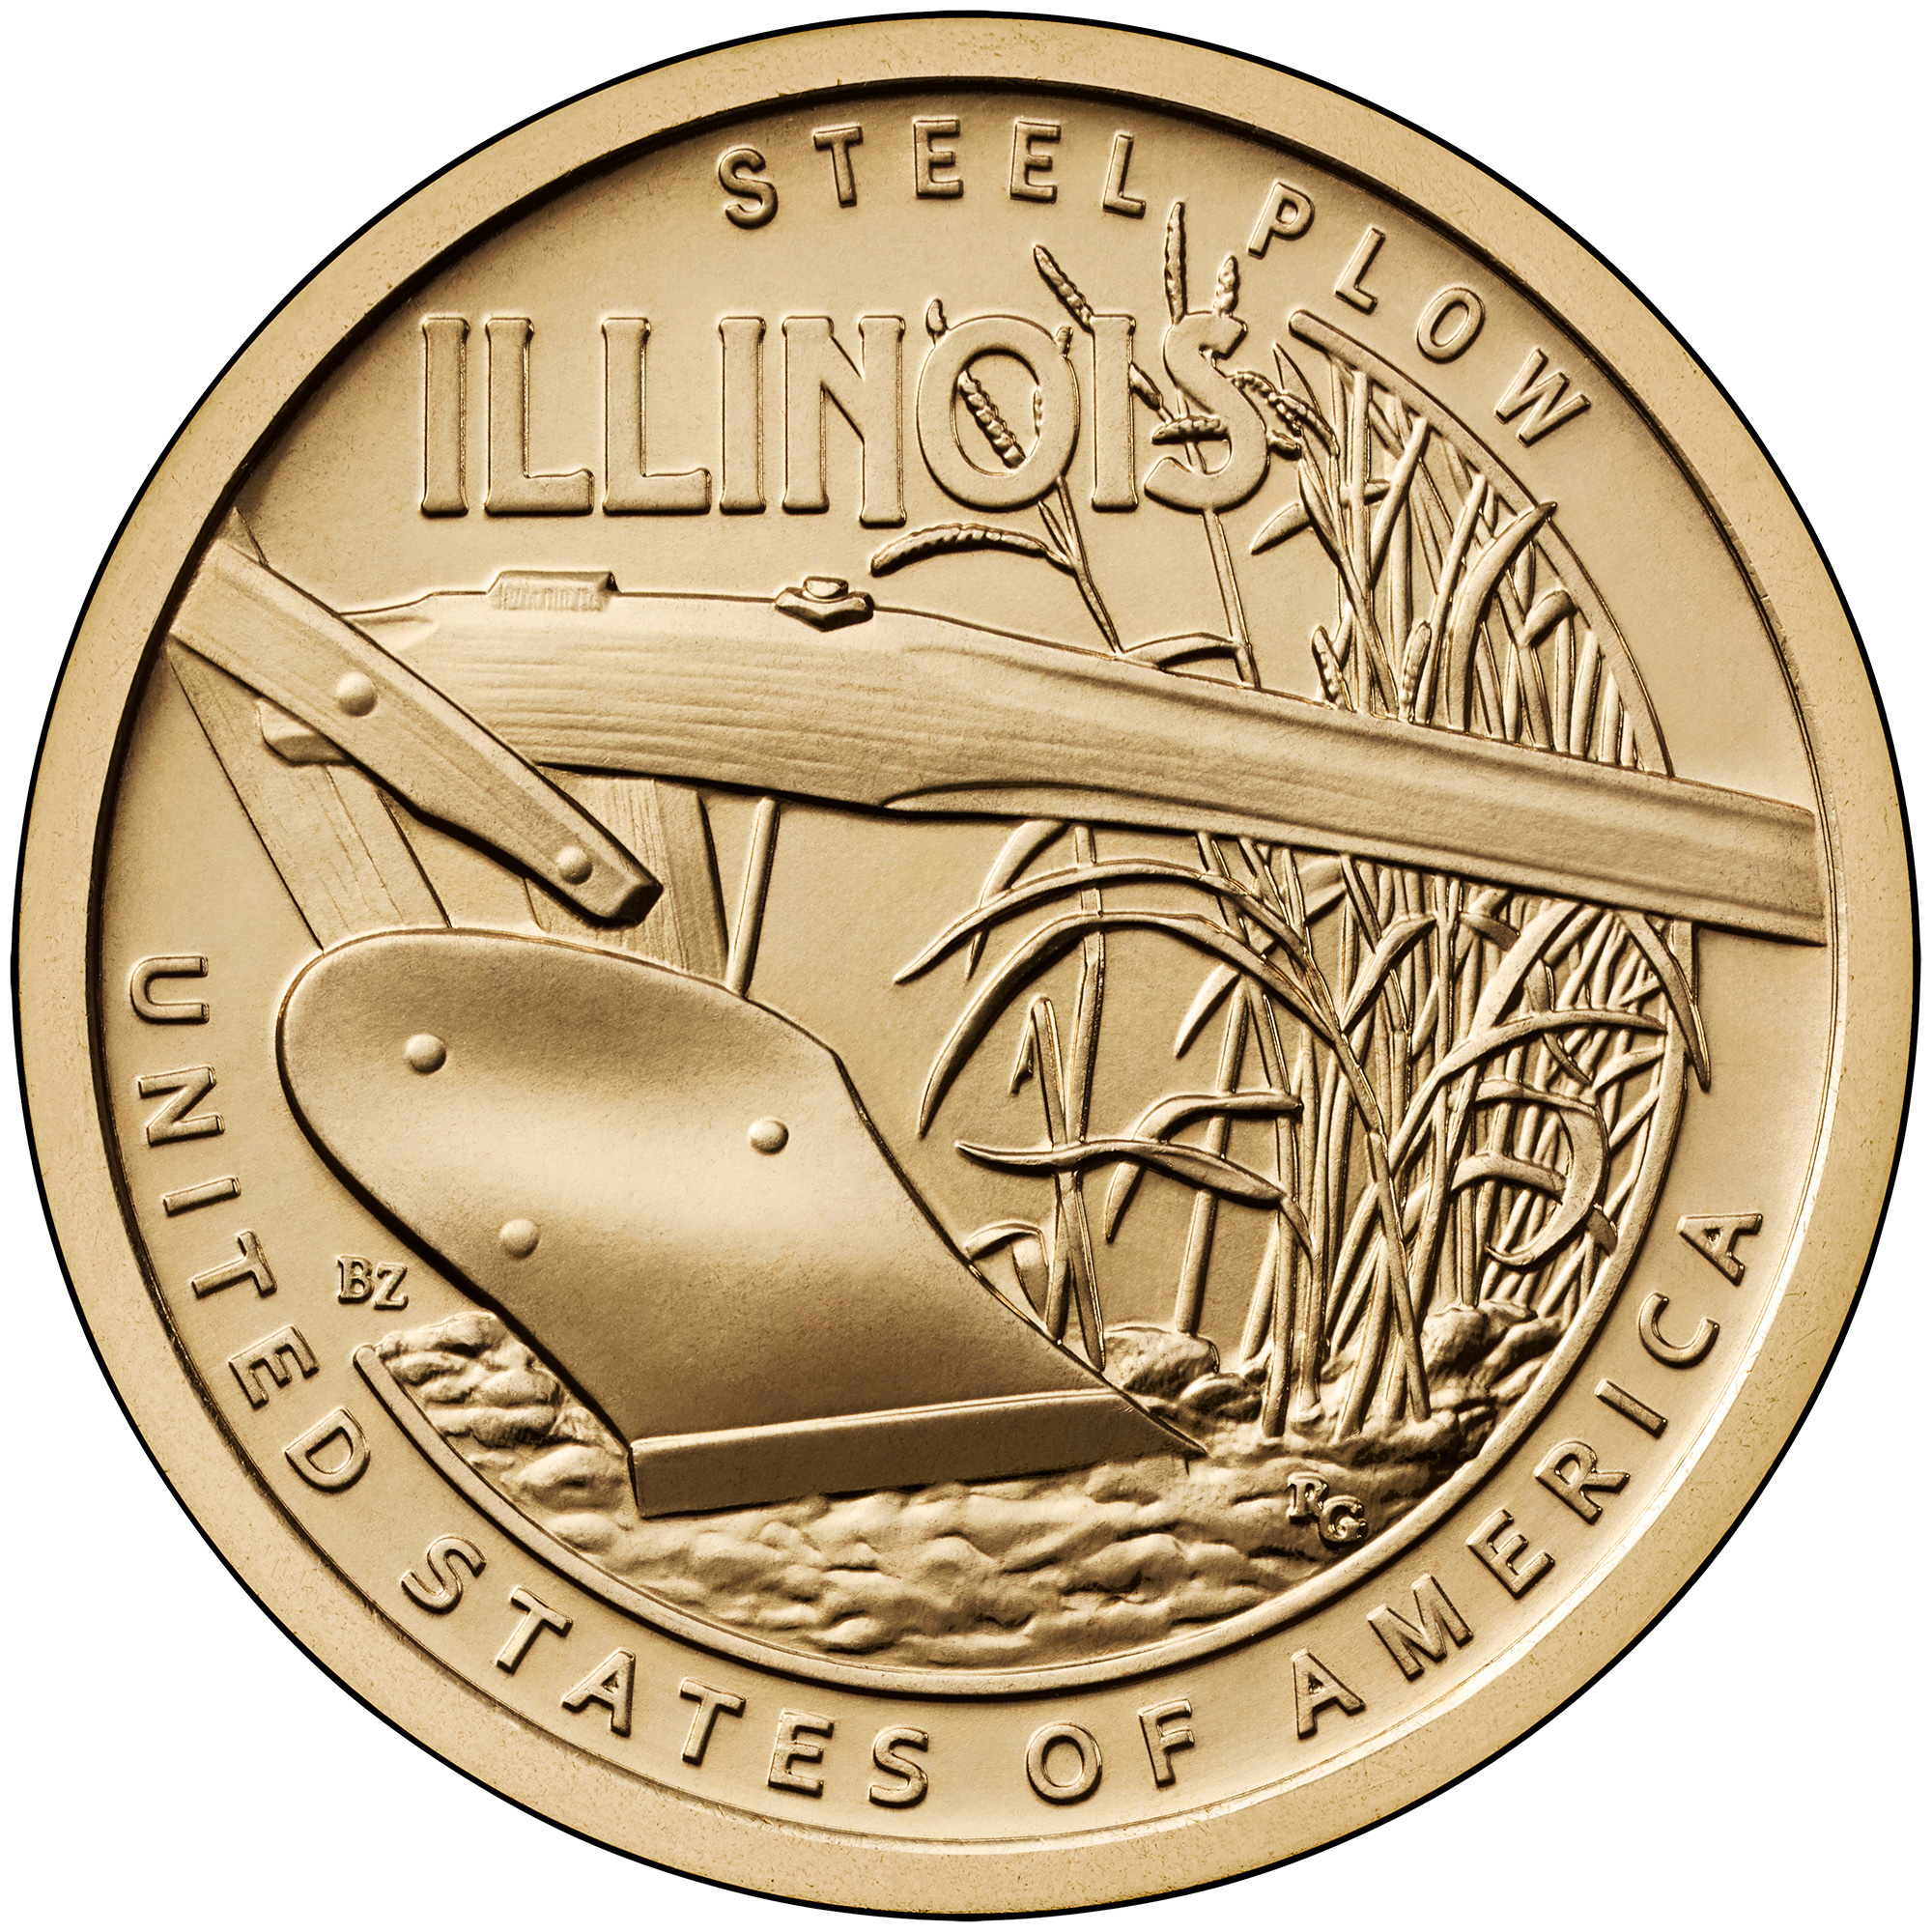 Illinois American Innovation® $1 Coin